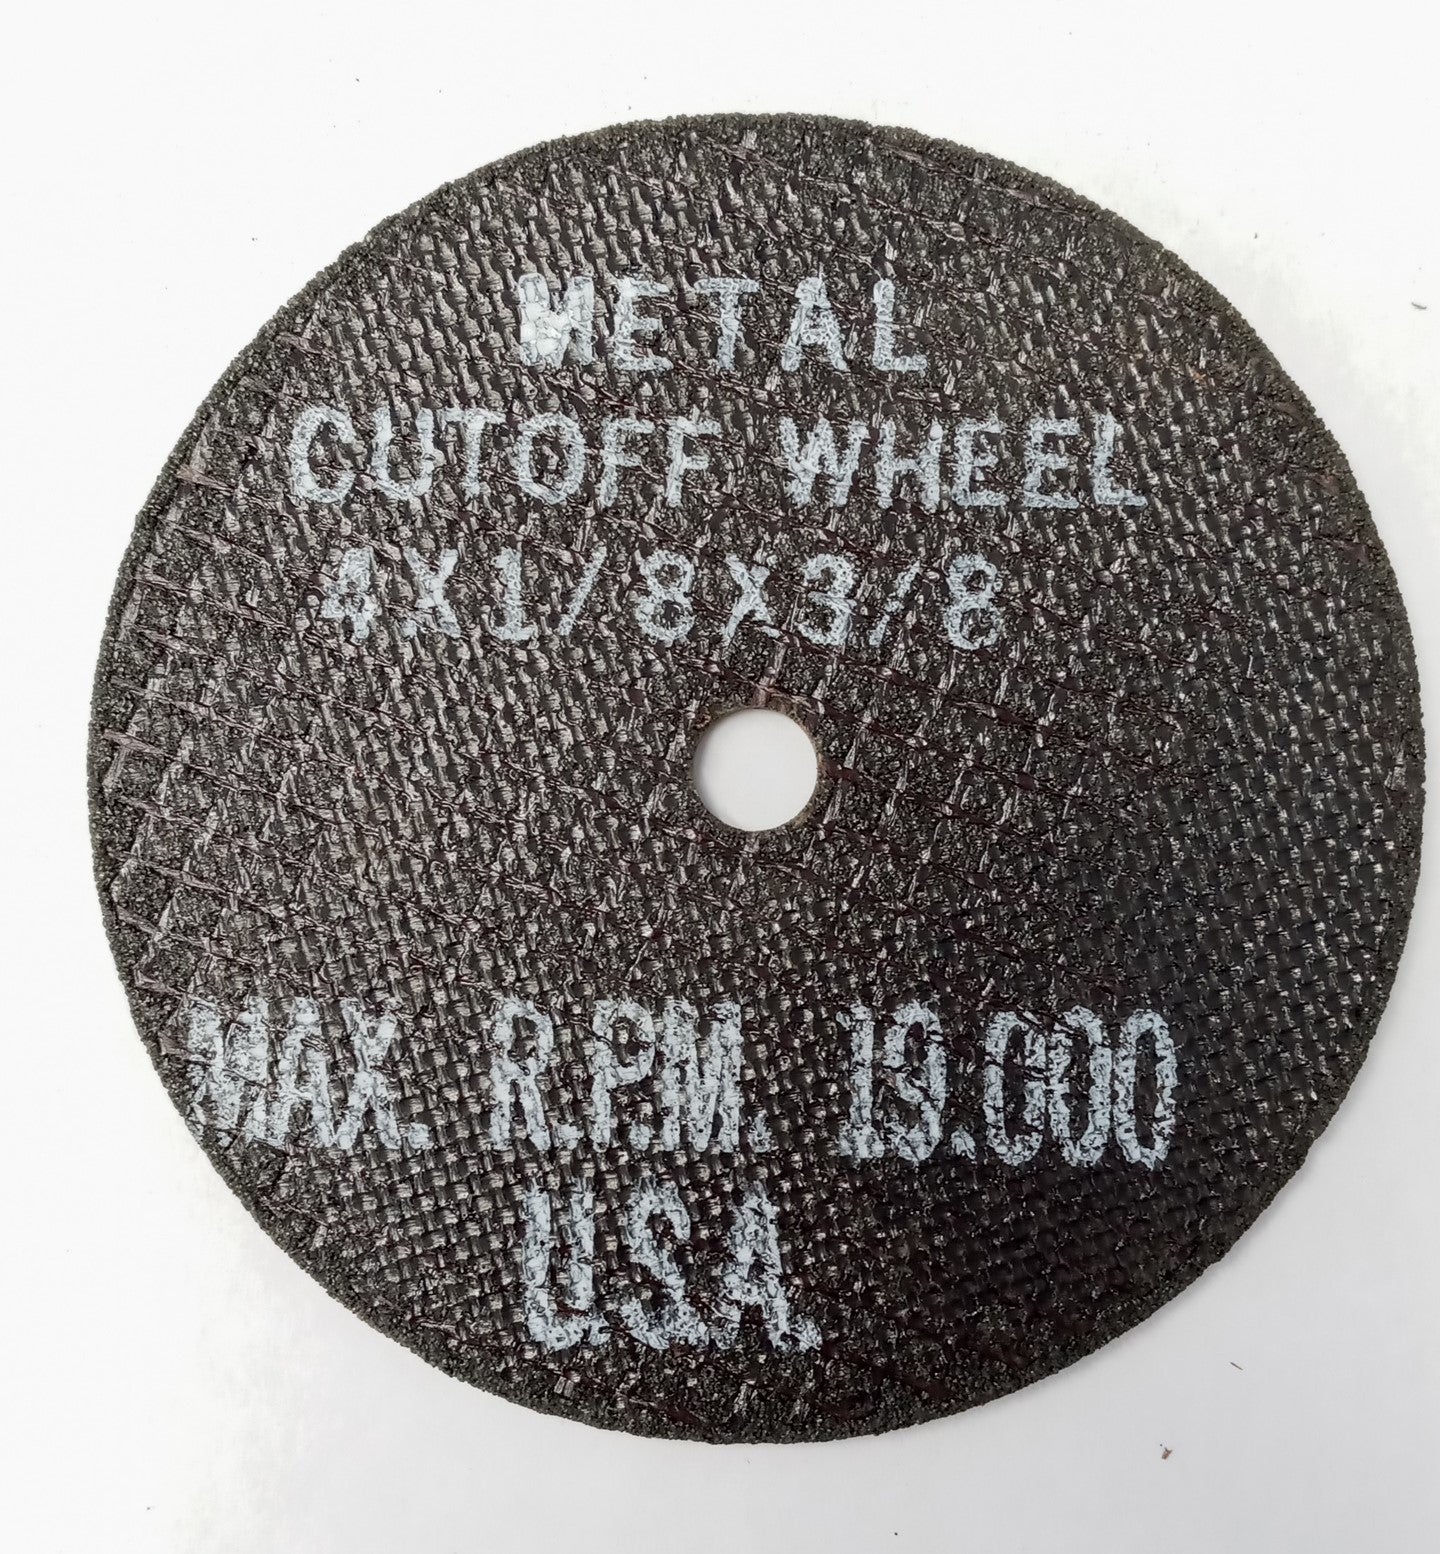 Farm & Fleet 185292 / 2050 Metal Cut Off Wheel  4 x 1/8  x 3/8 USA